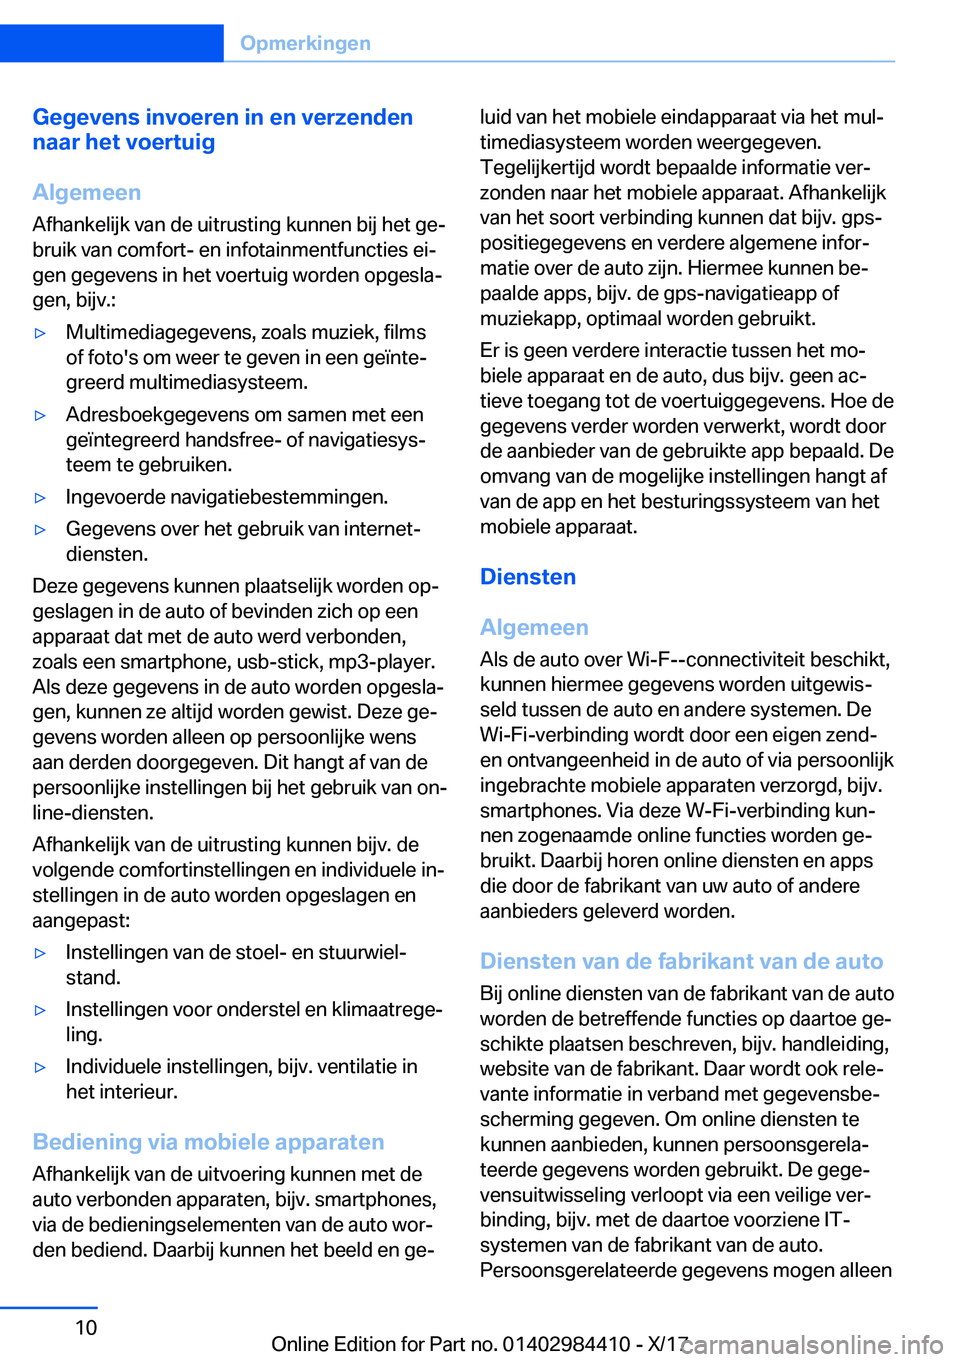 BMW 4 SERIES COUPE 2018  Instructieboekjes (in Dutch) �G�e�g�e�v�e�n�s��i�n�v�o�e�r�e�n��i�n��e�n��v�e�r�z�e�n�d�e�n
�n�a�a�r��h�e�t��v�o�e�r�t�u�i�g
�A�l�g�e�m�e�e�n
�A�f�h�a�n�k�e�l�i�j�k� �v�a�n� �d�e� �u�i�t�r�u�s�t�i�n�g� �k�u�n�n�e�n� �b�i�j�